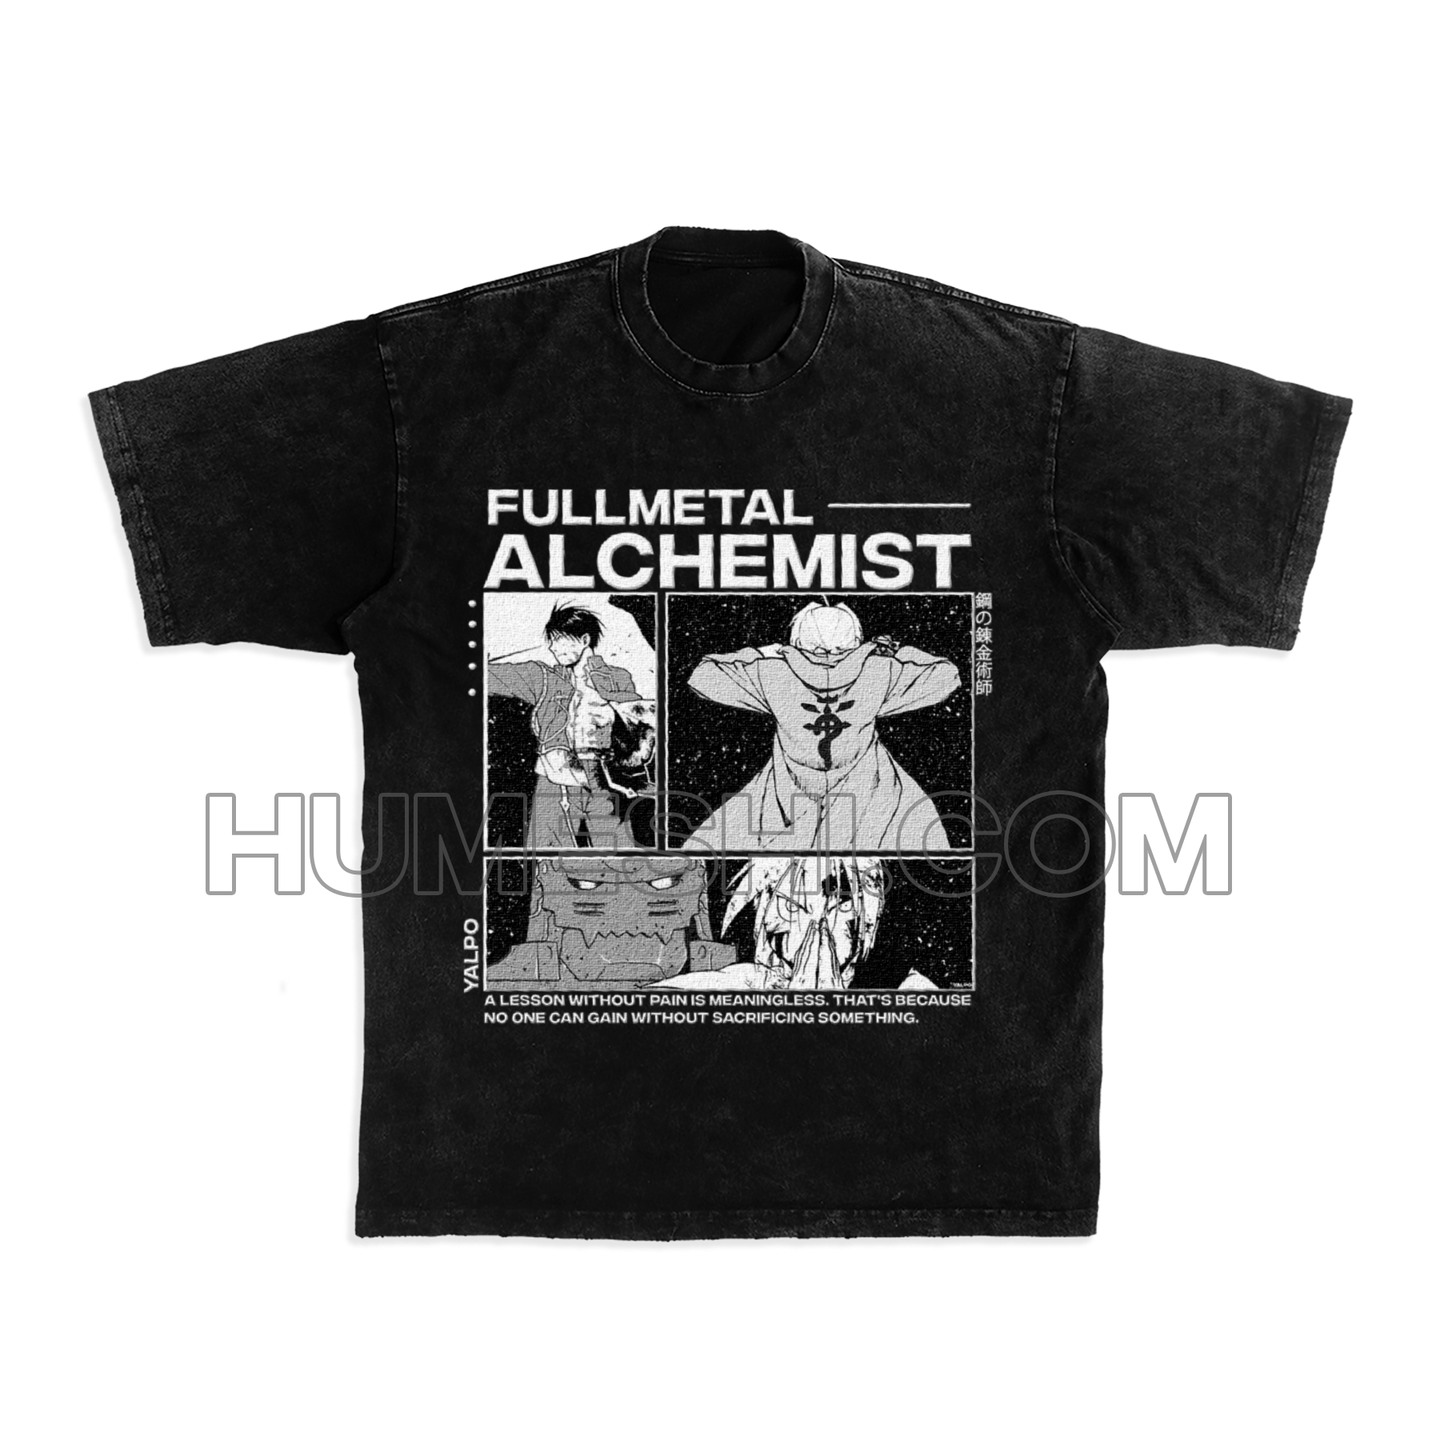 Fullmetal Alchemist Shirt